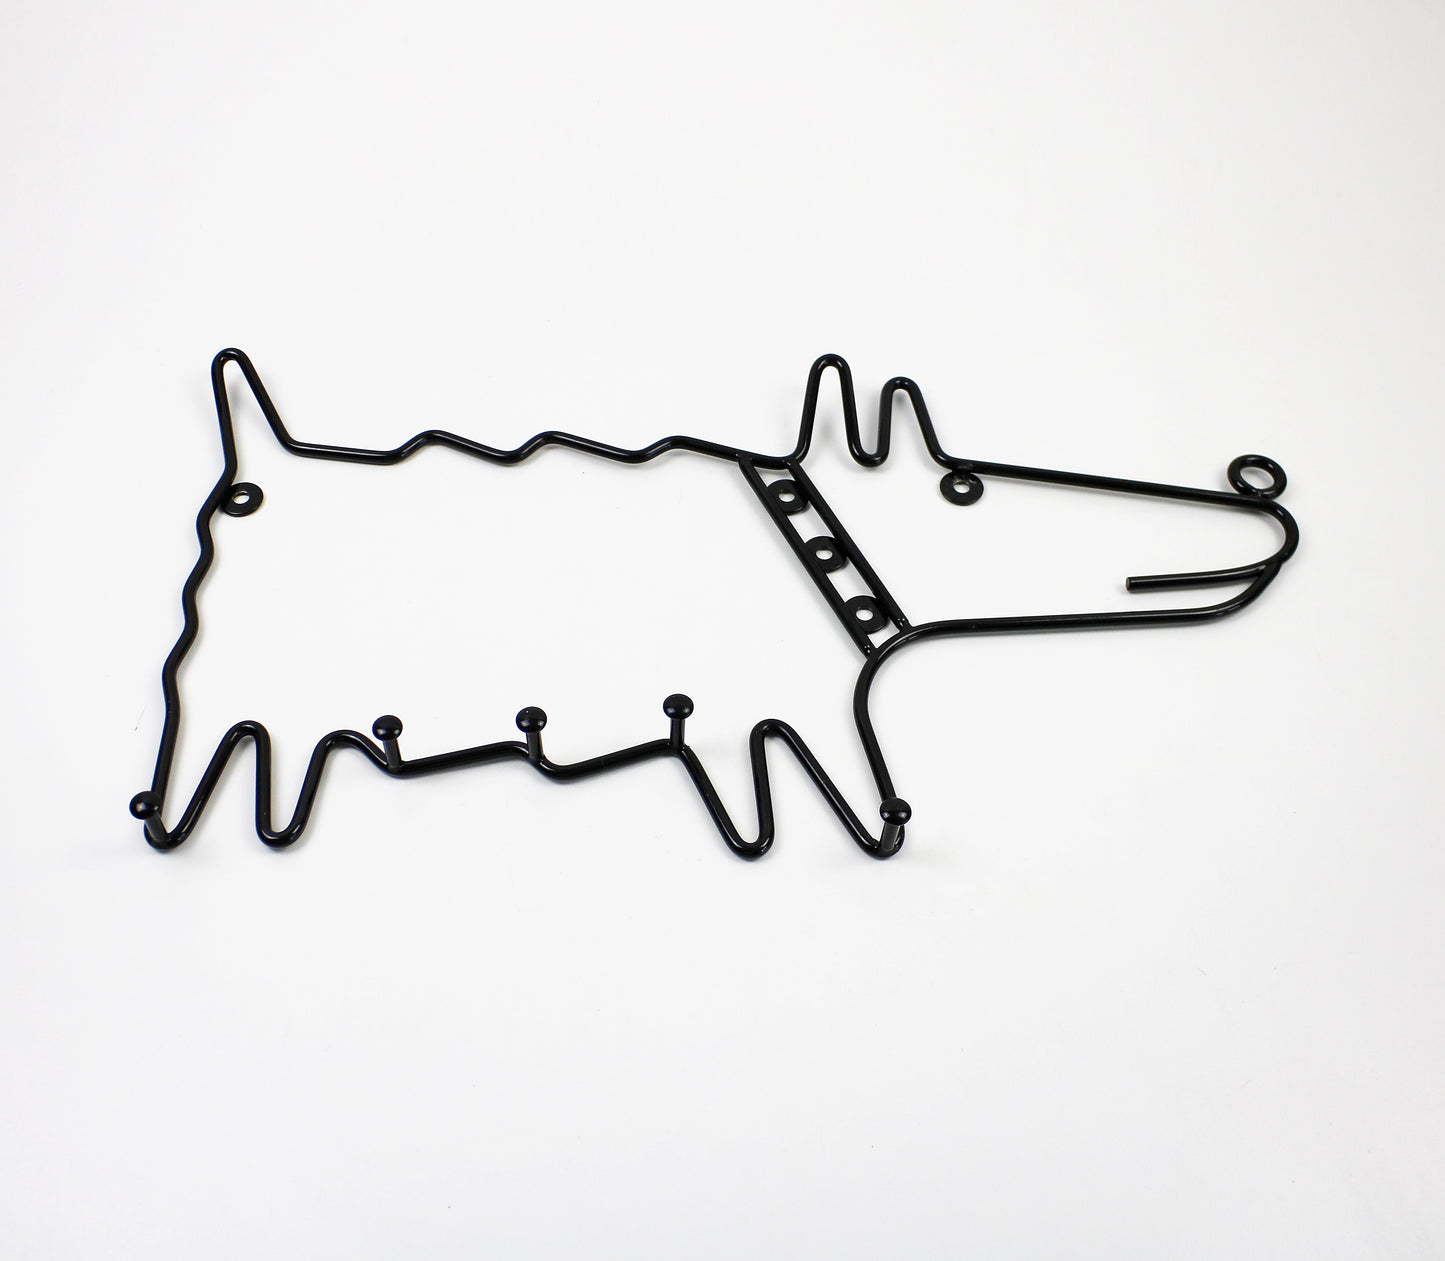 Retired wire dog coat rack hooks / sculpture by IKEA